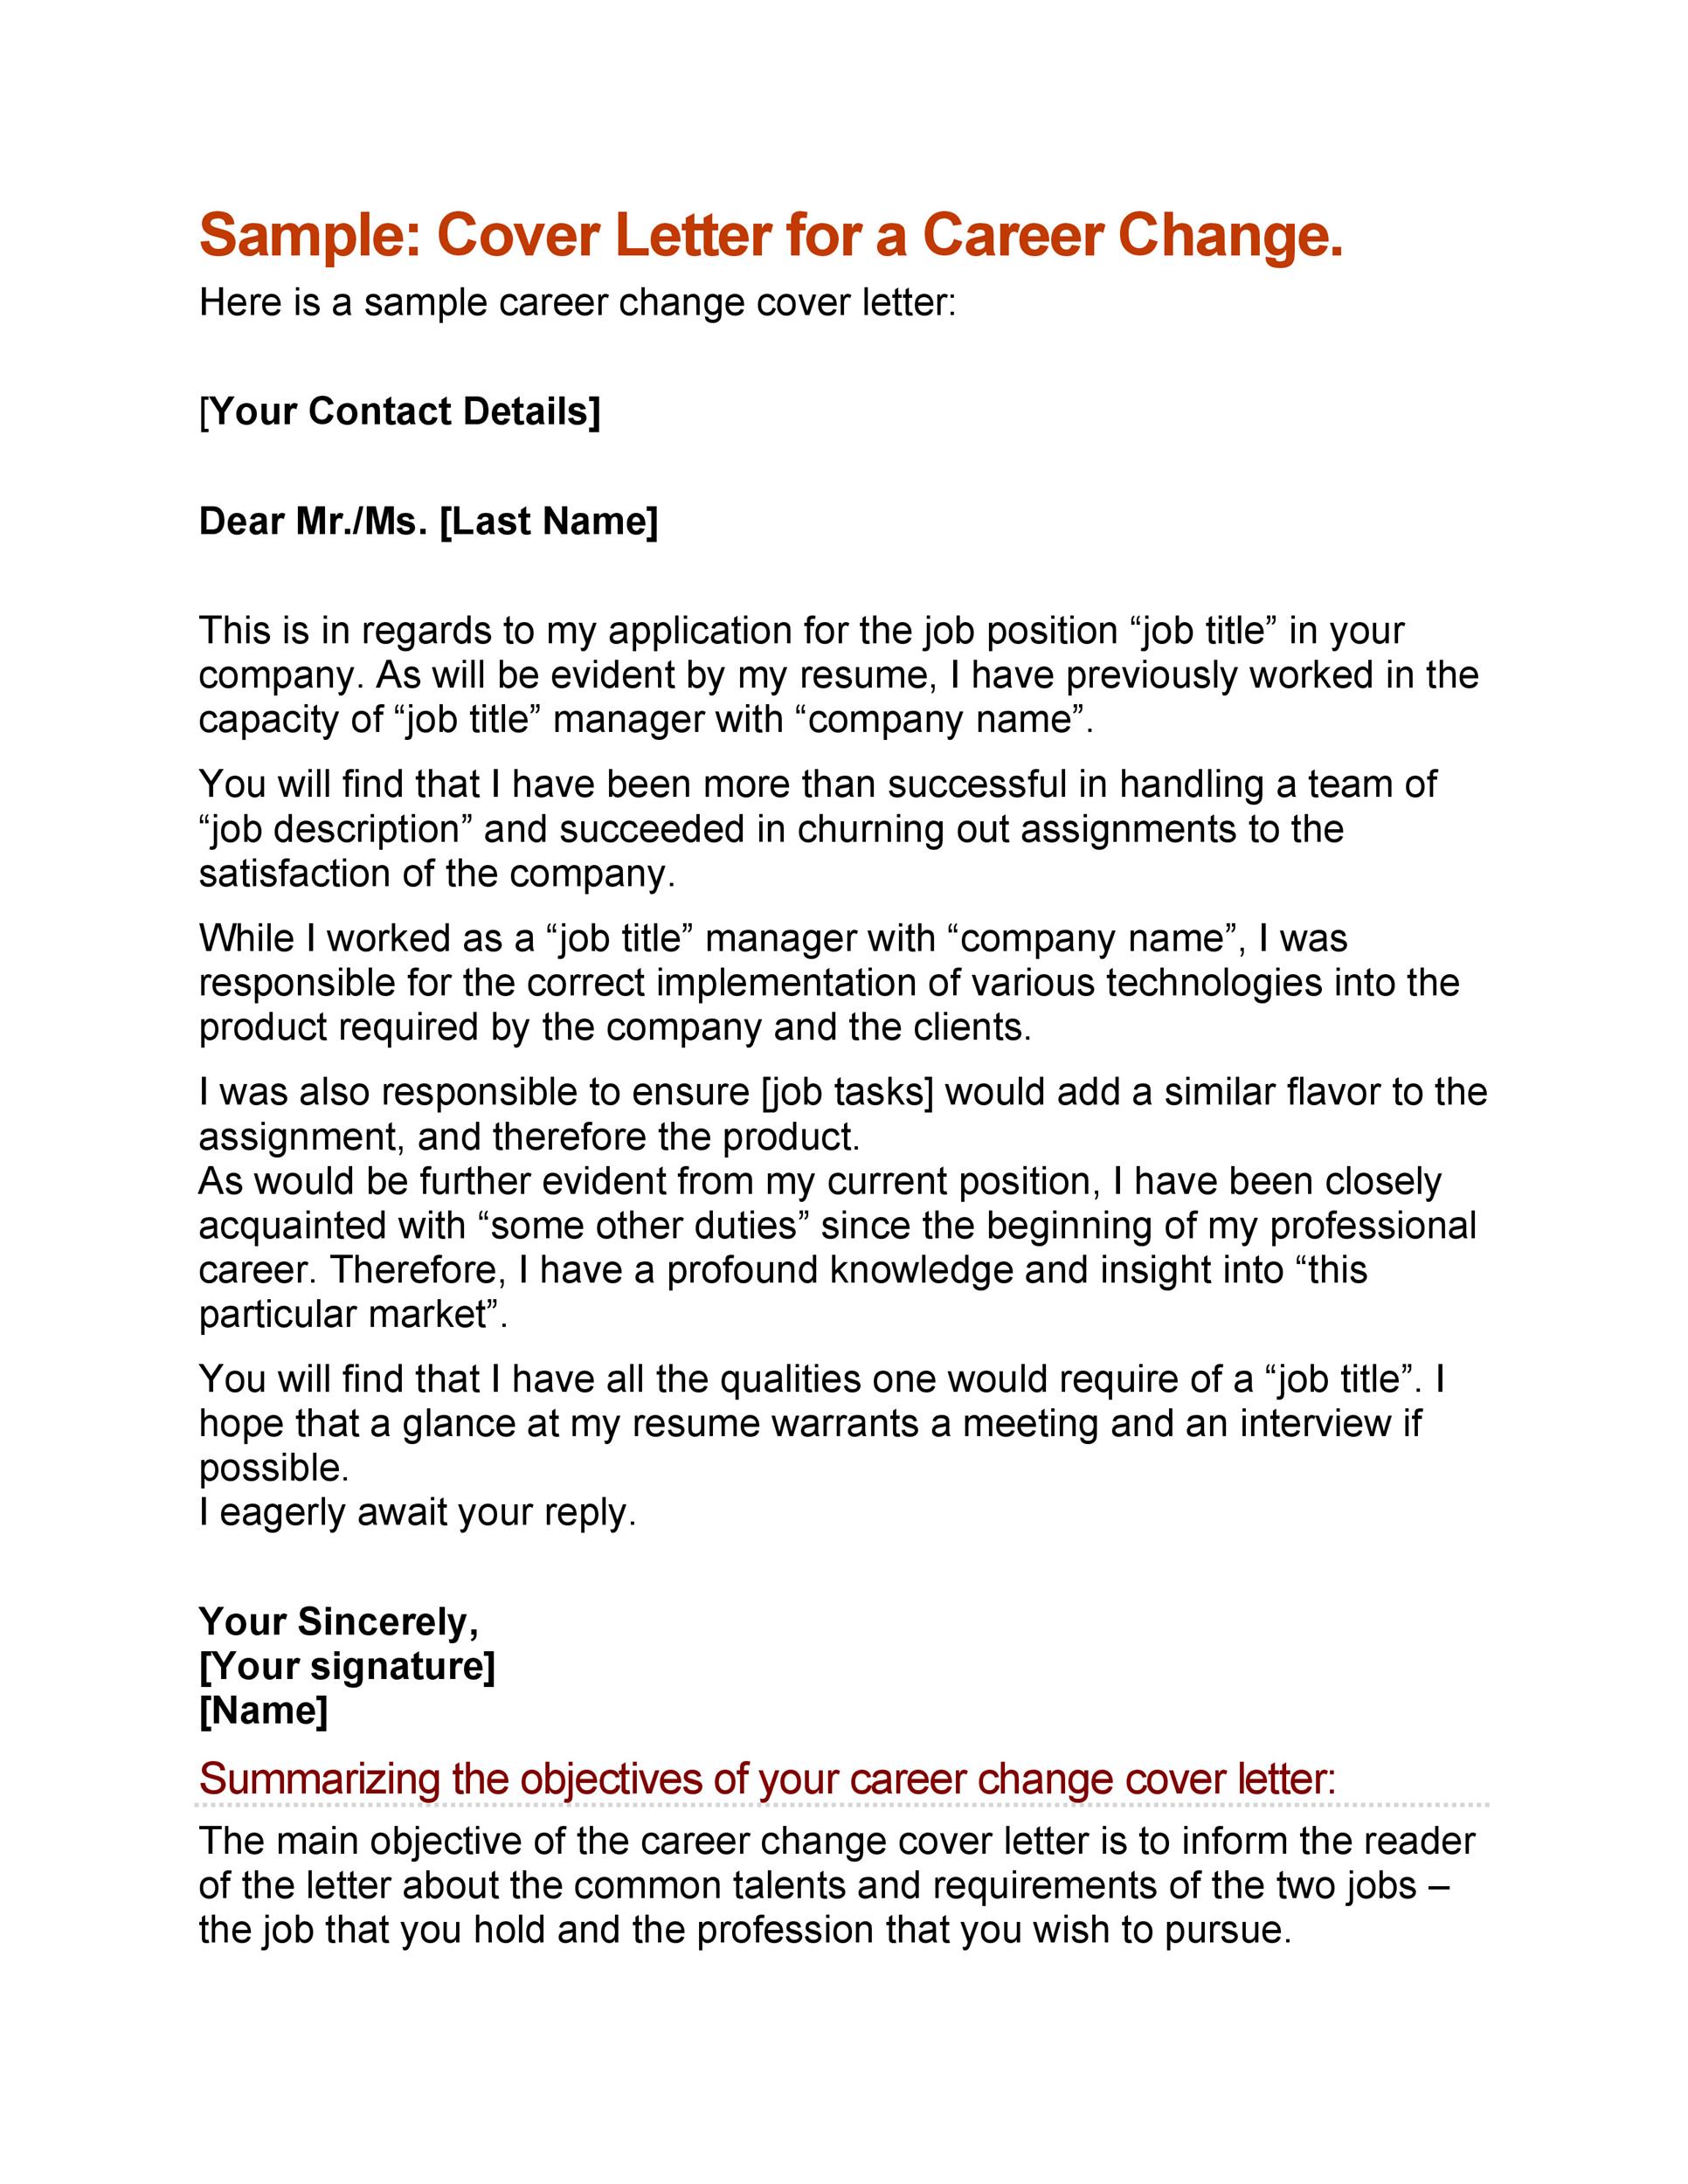 cover letter for job change